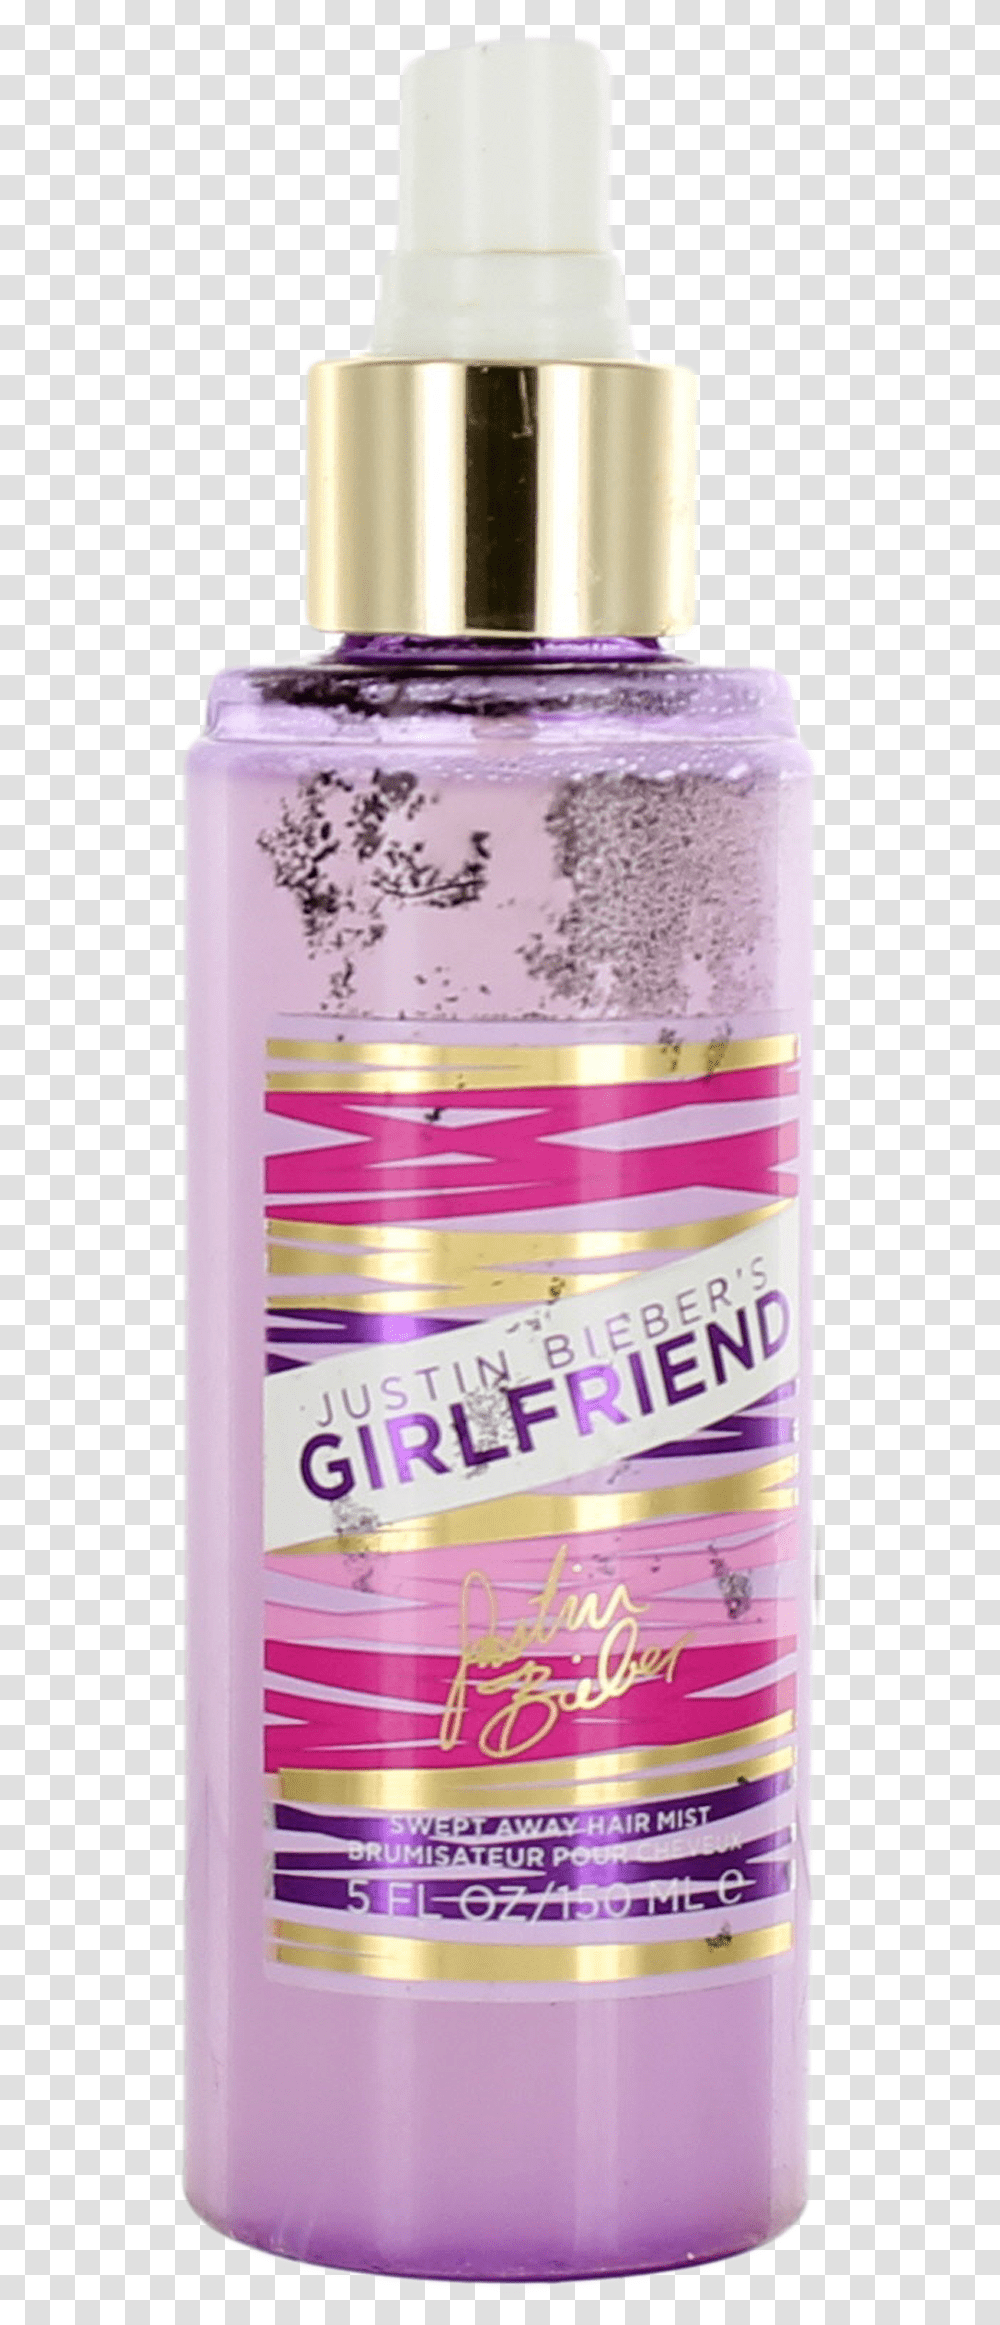 Girlfriend By Justin Bieber For Women Hair Mist Spray Bottle, Aluminium, Can, Spray Can, Beverage Transparent Png